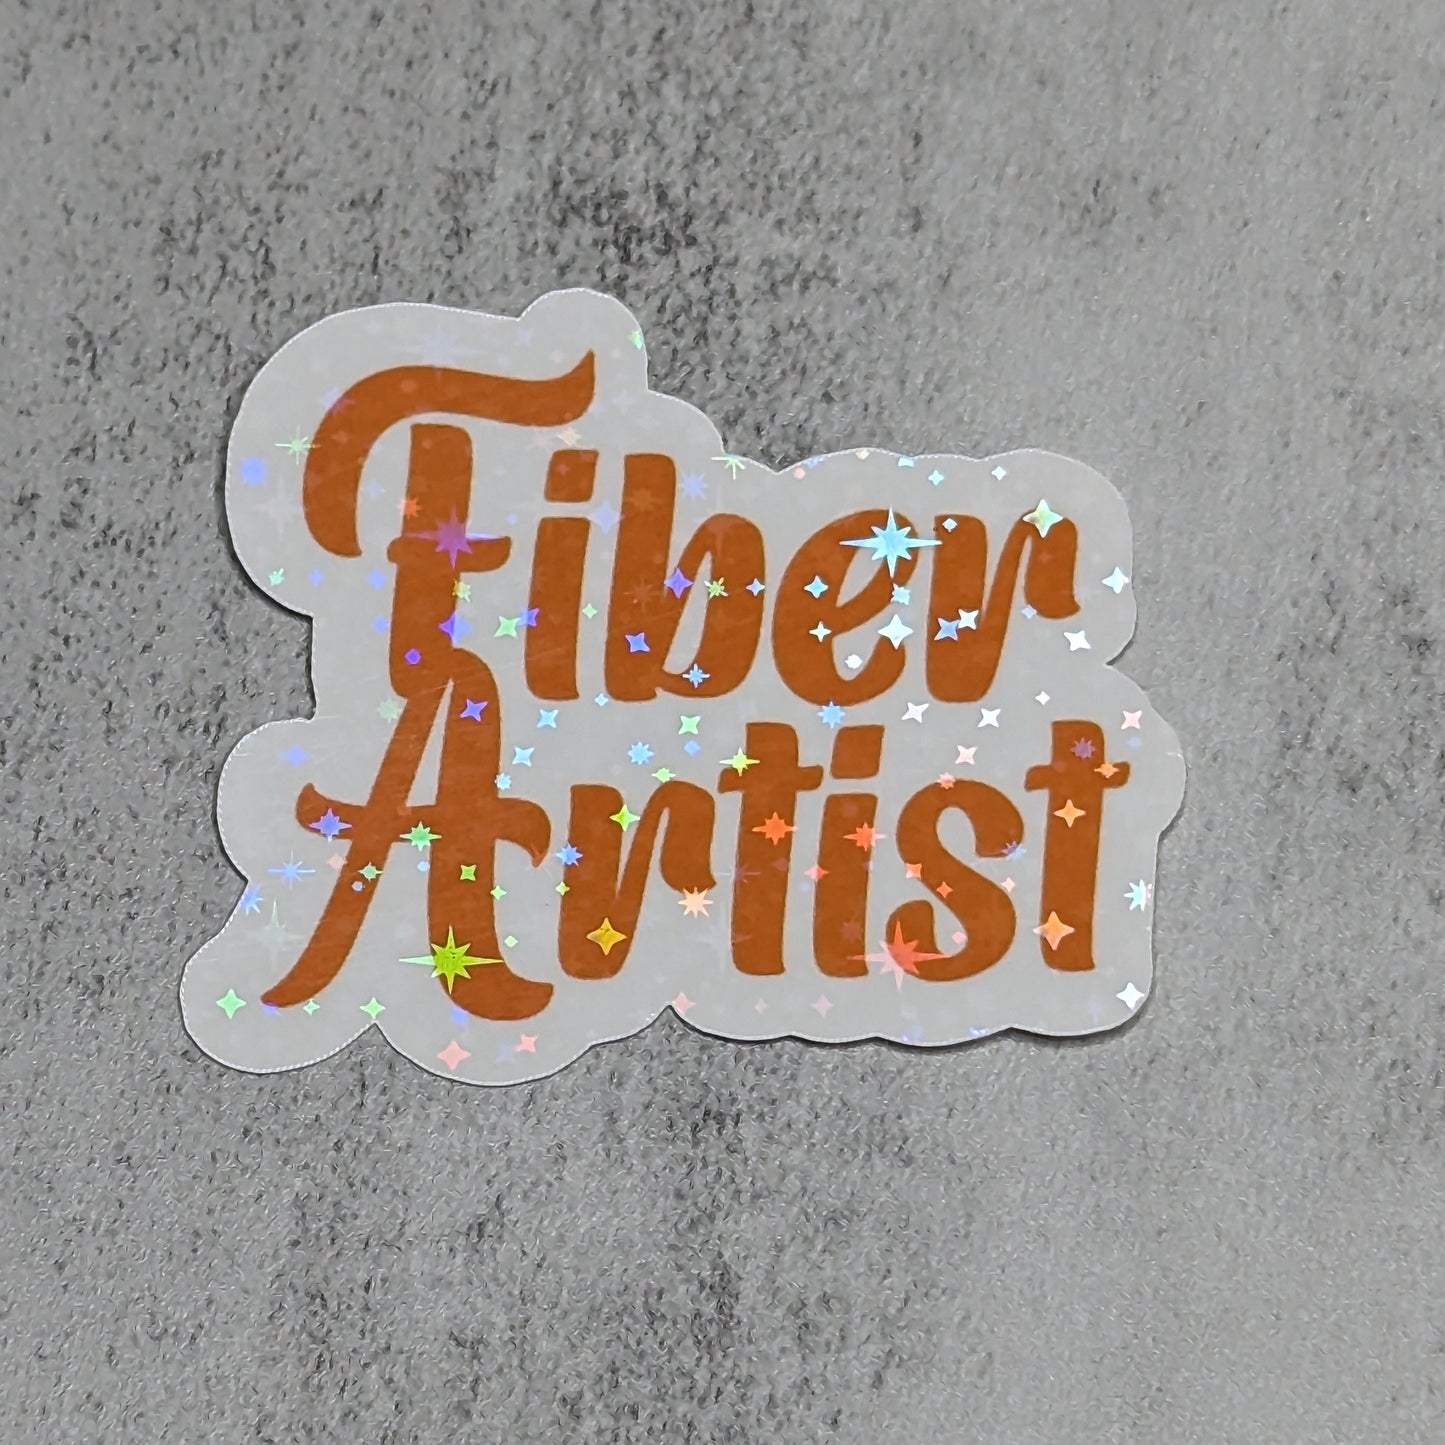 Fiber Artist Die-Cut Sticker Decal